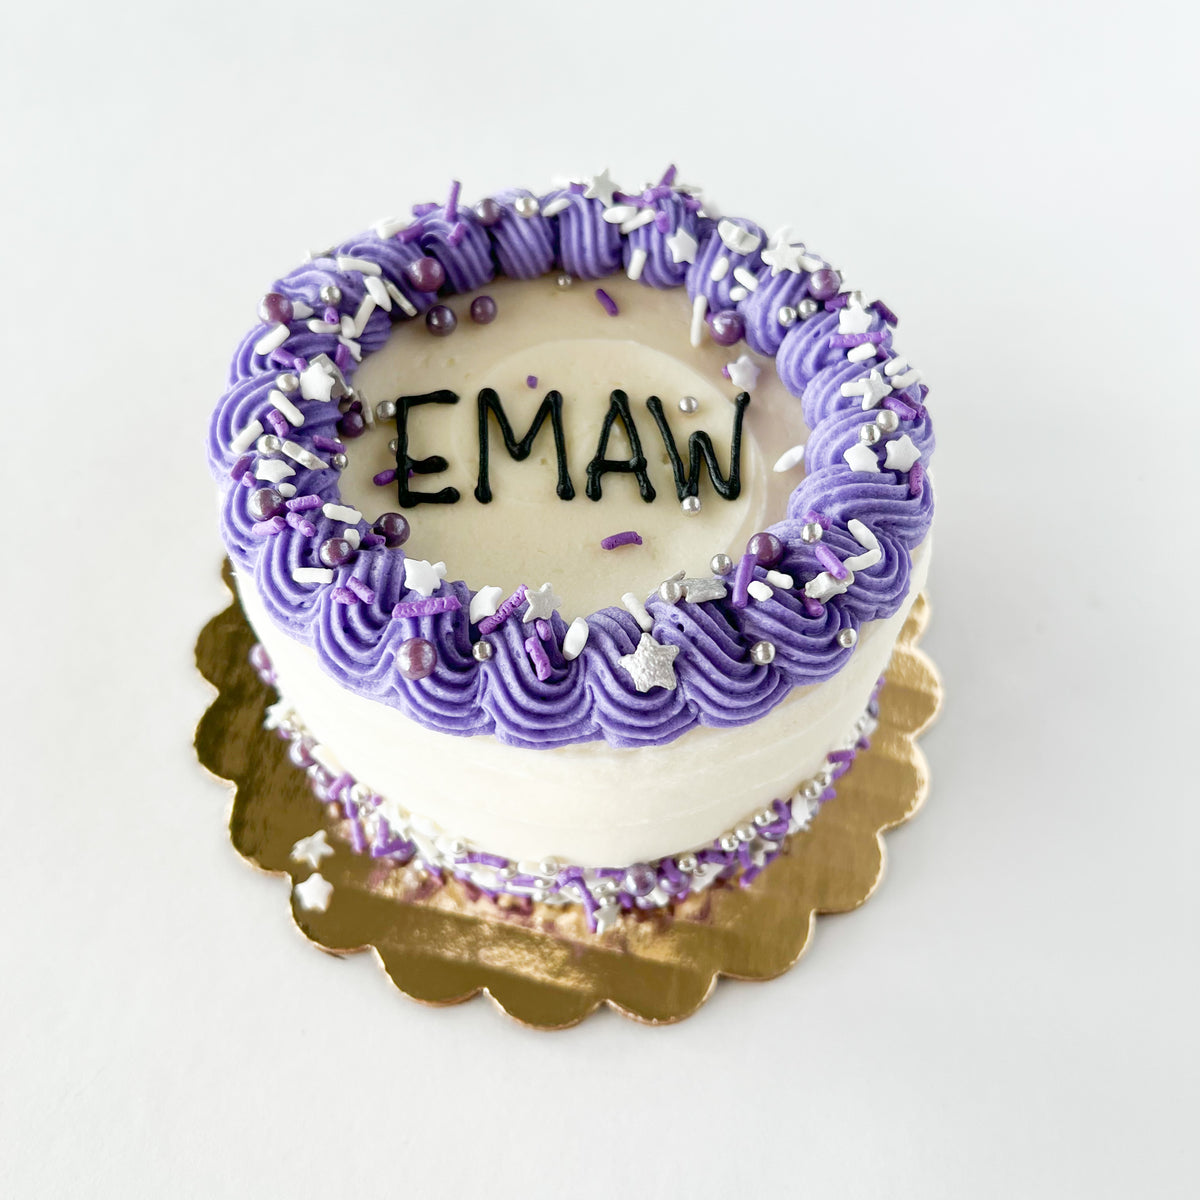 EMAW Cake